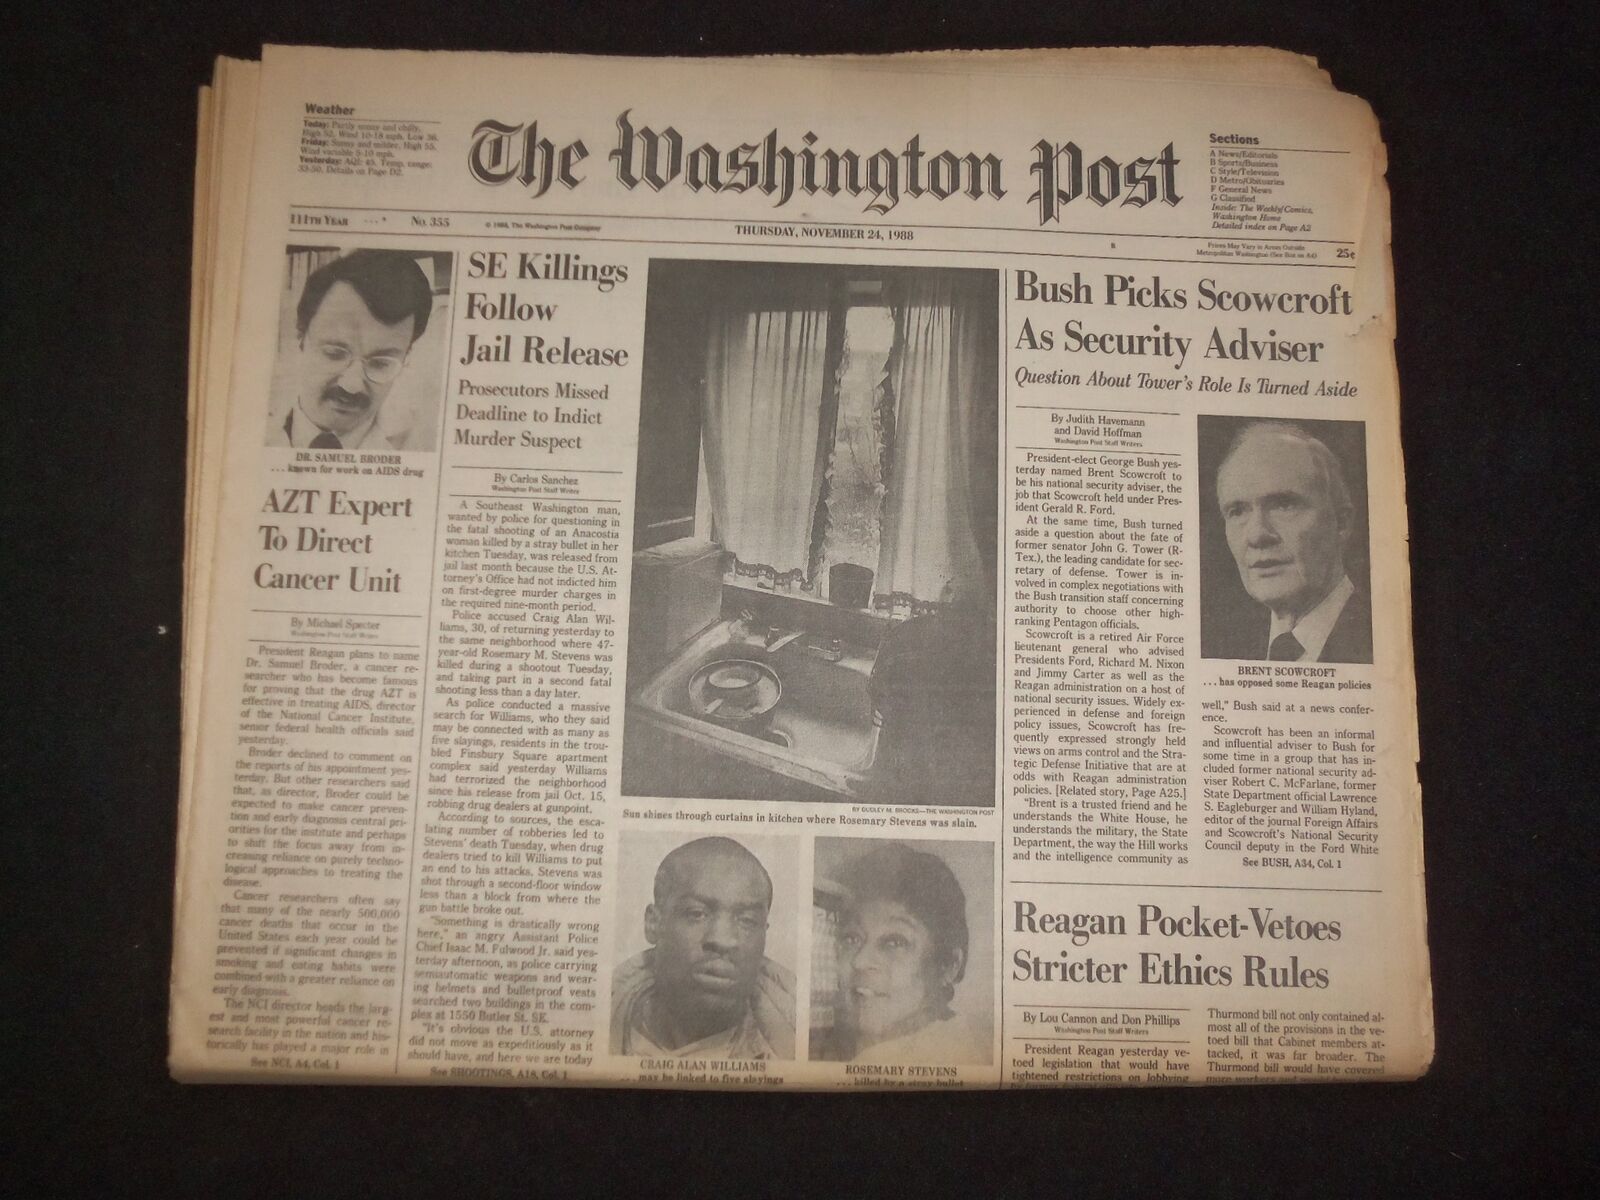 1988 NOV 22 WASHINGTON POST NEWSPAPER - BUSH PICKS SCOWCROFT ADVISOR - NP 8314